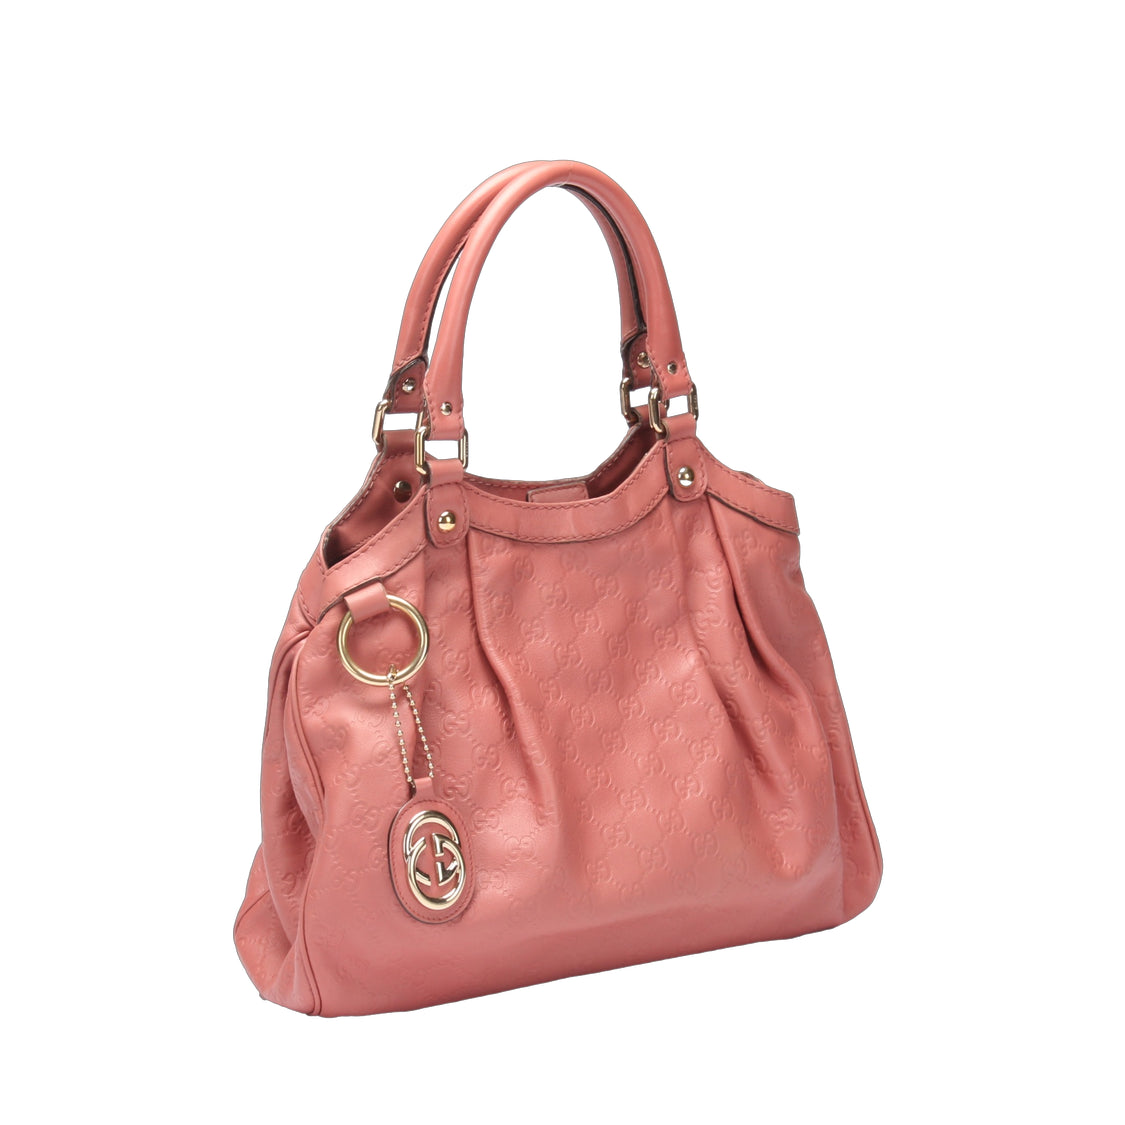 Gucci Guccissima Leather Sukey Handbag Leather Handbag 211944 in Good condition